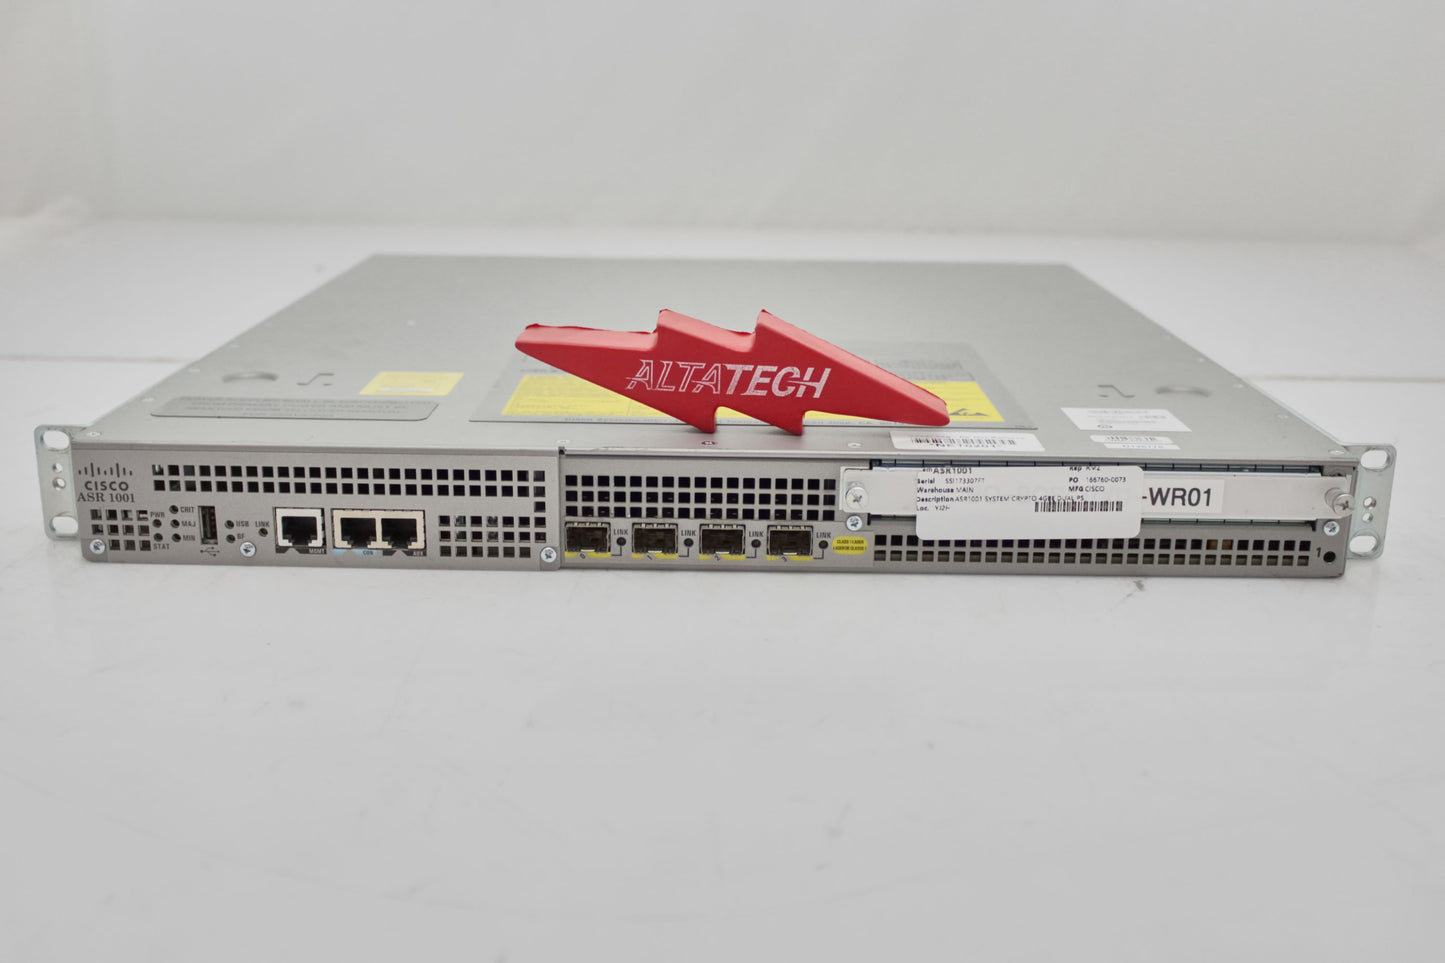 Cisco ASR1001 ASR1001 Cisco Aggregation Service Router, Used